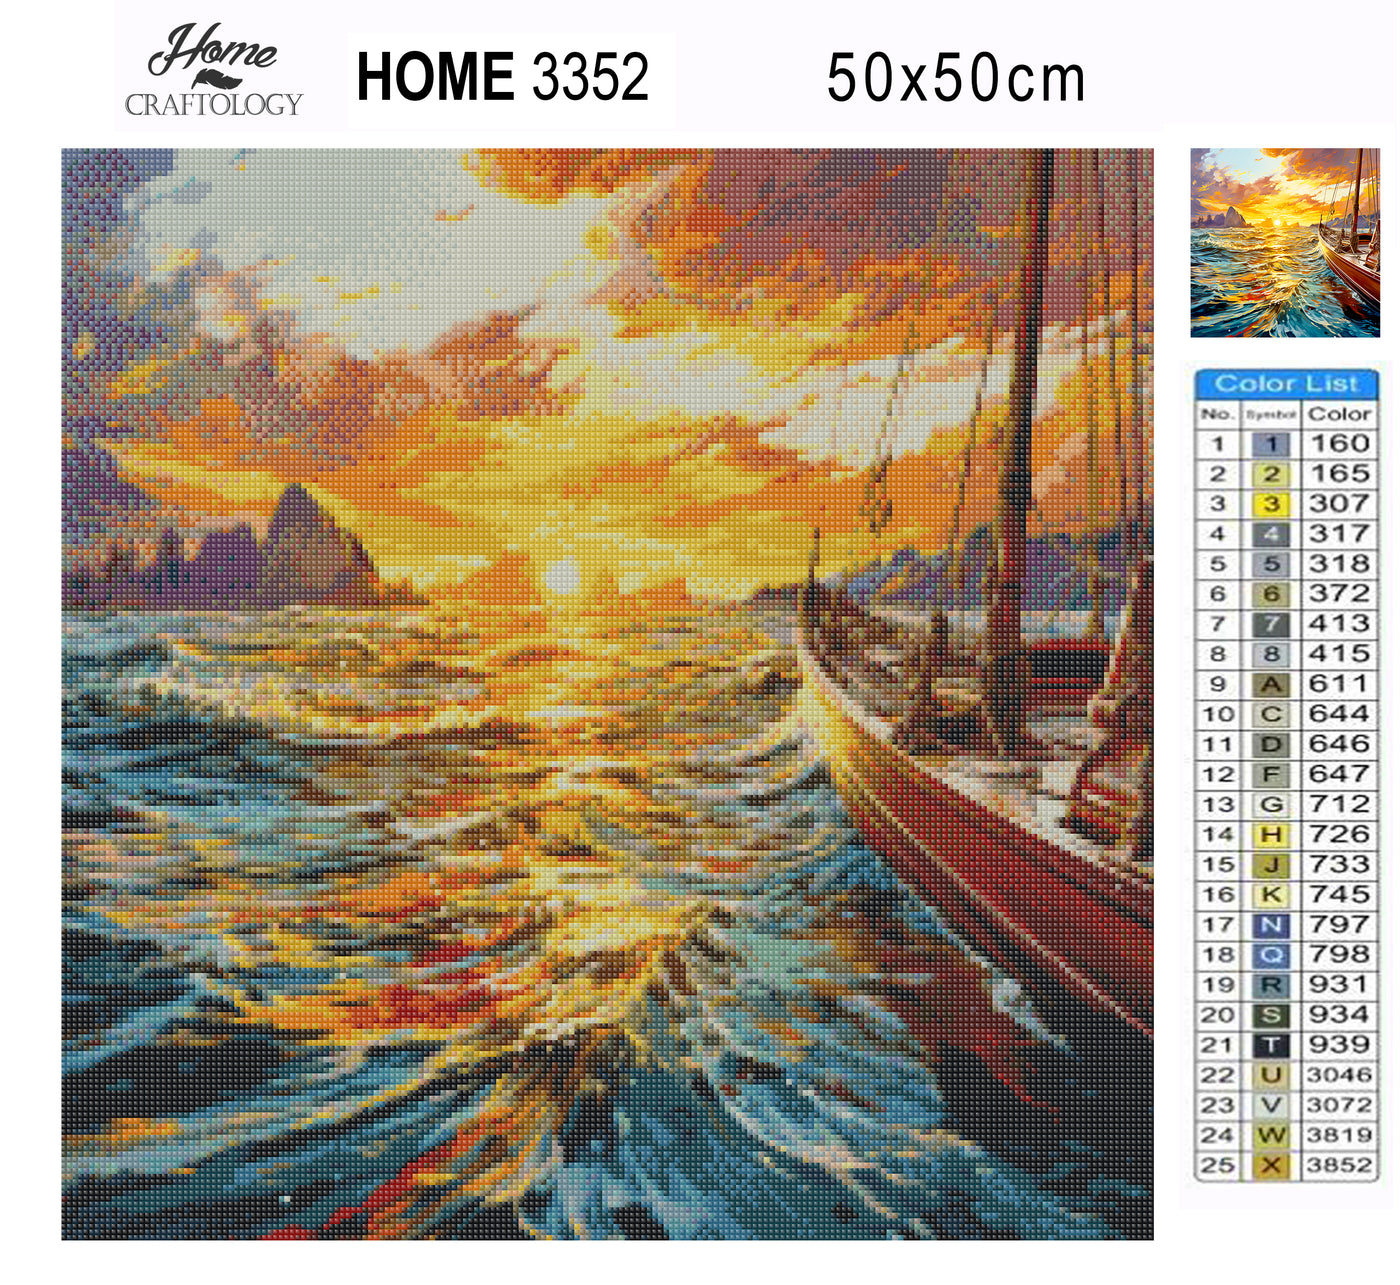 New! Sailing into the Sunset   - Premium Diamond Painting Kit